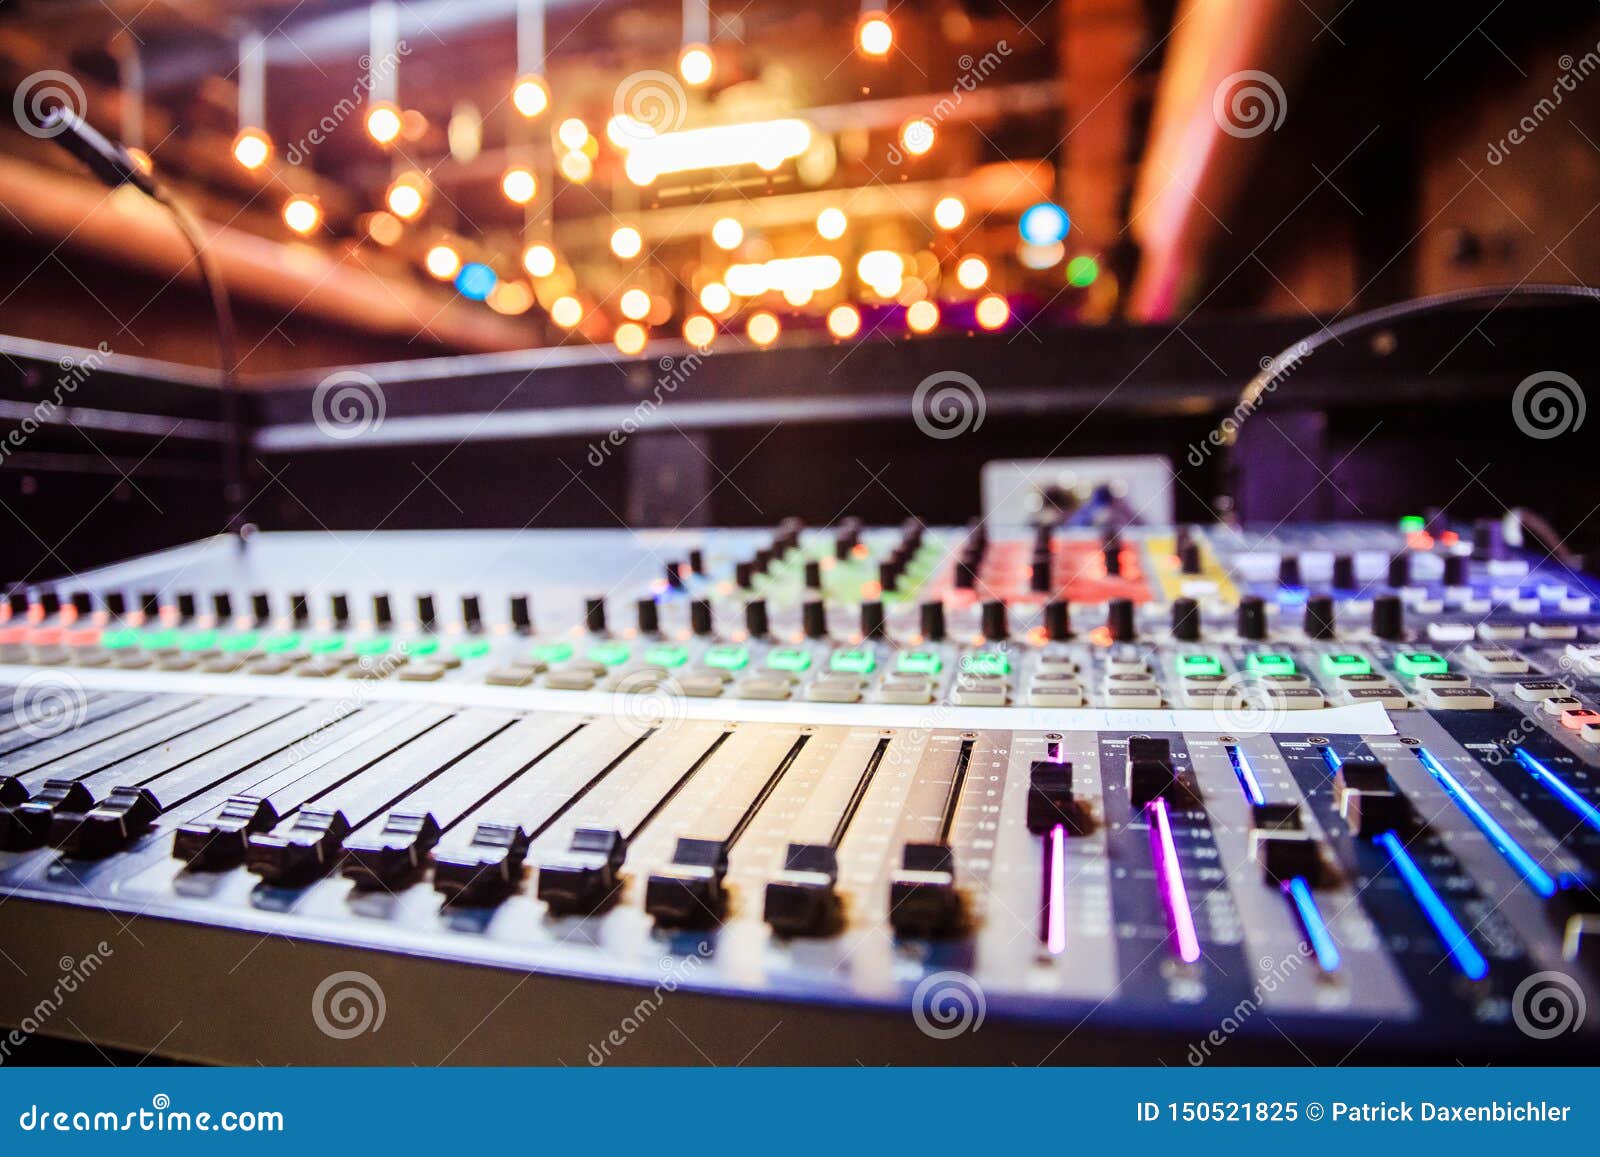 Sound Recording Studio Mixer Desk At A Concert Professional Music